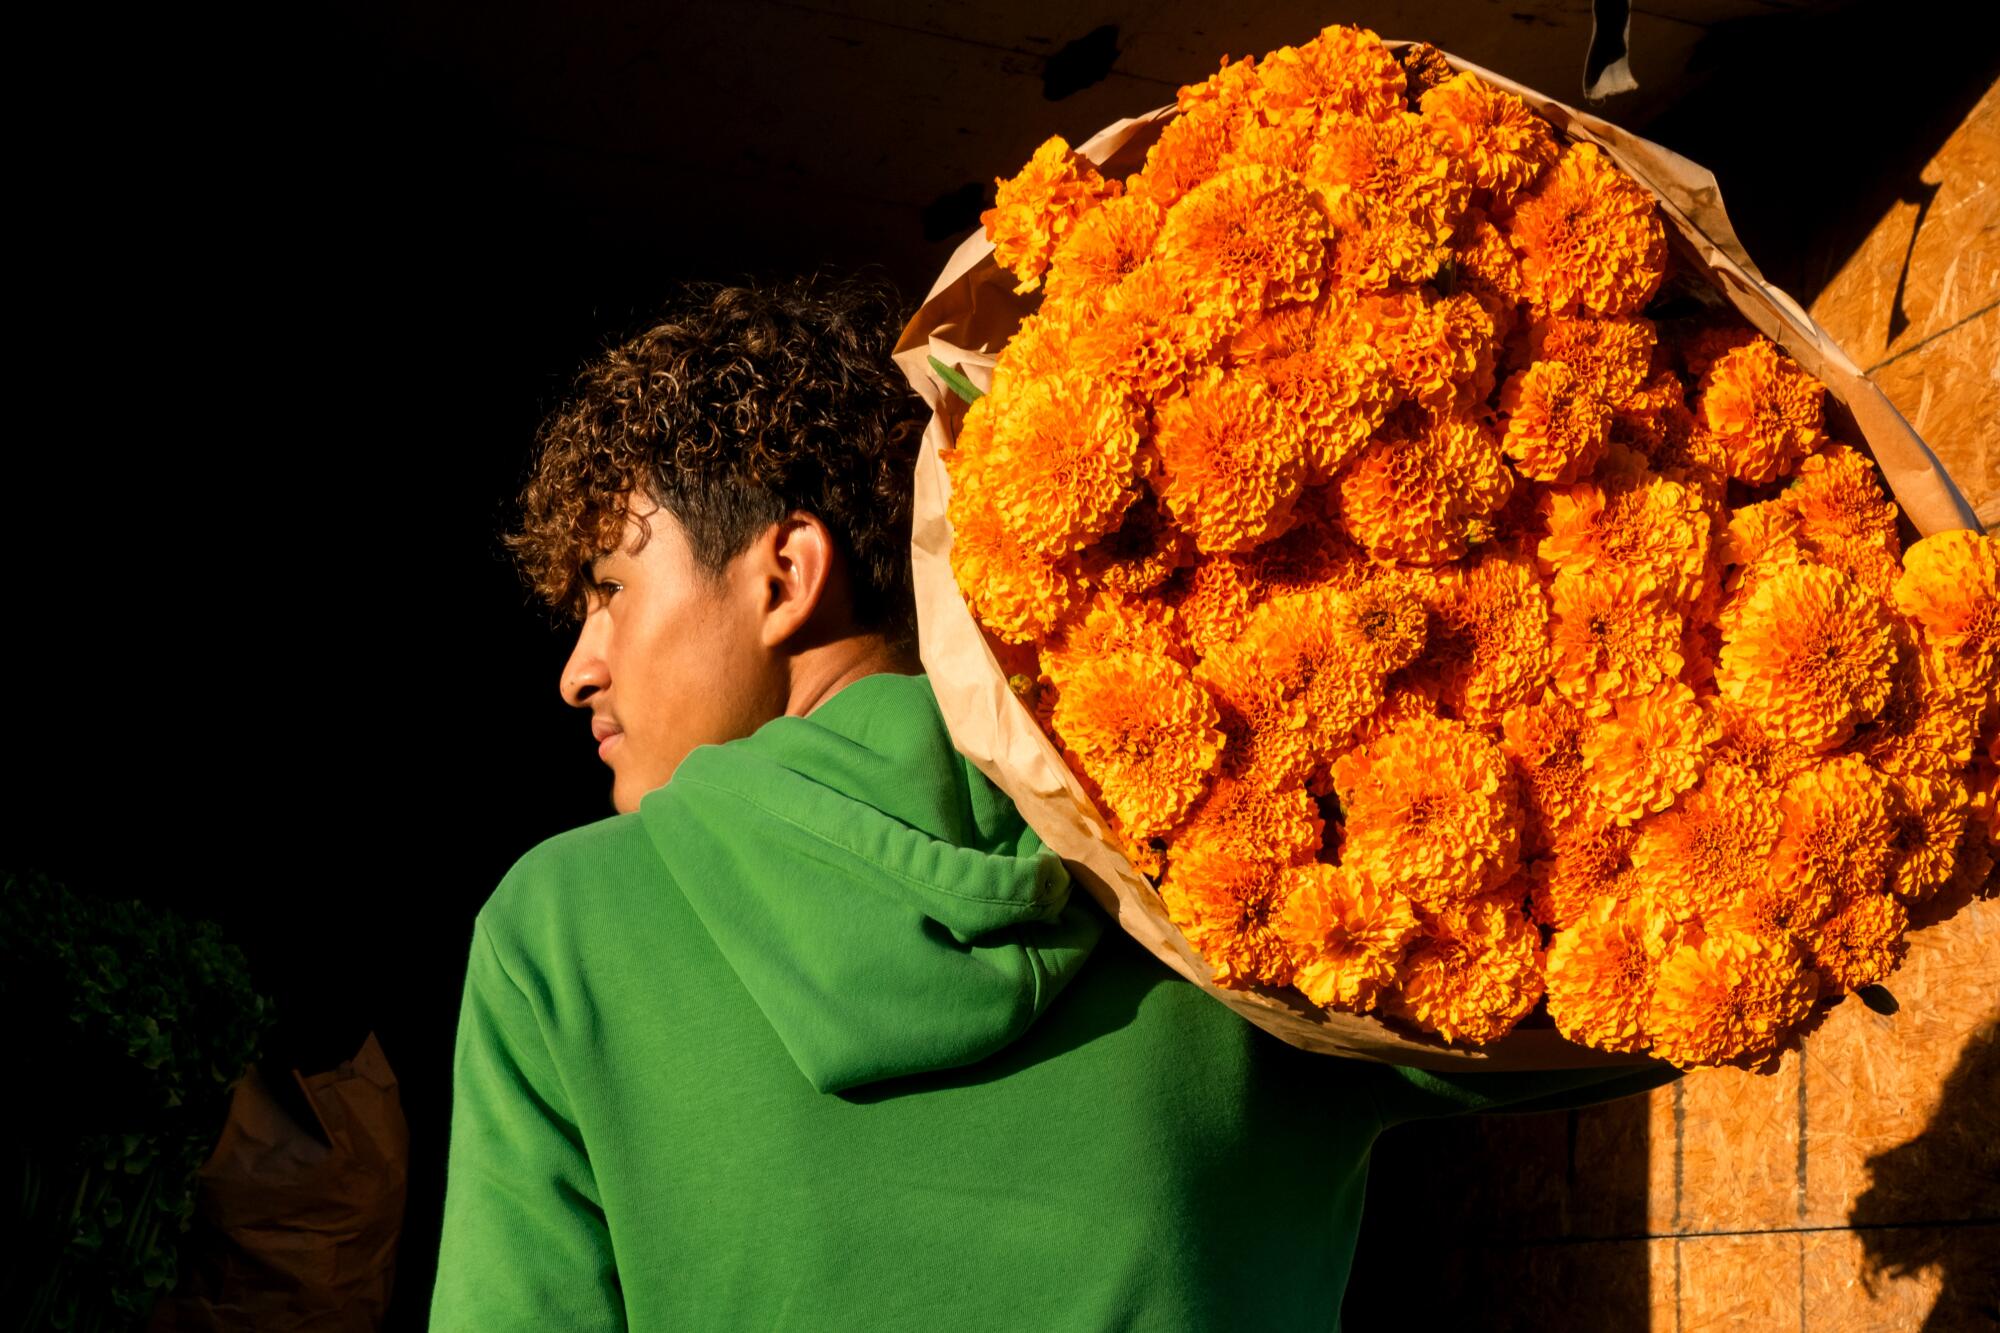 Flower market worker, Angel Soteloa, unloading a fresh cempasuchil (Marigolds) truckload in downtrown L.A.